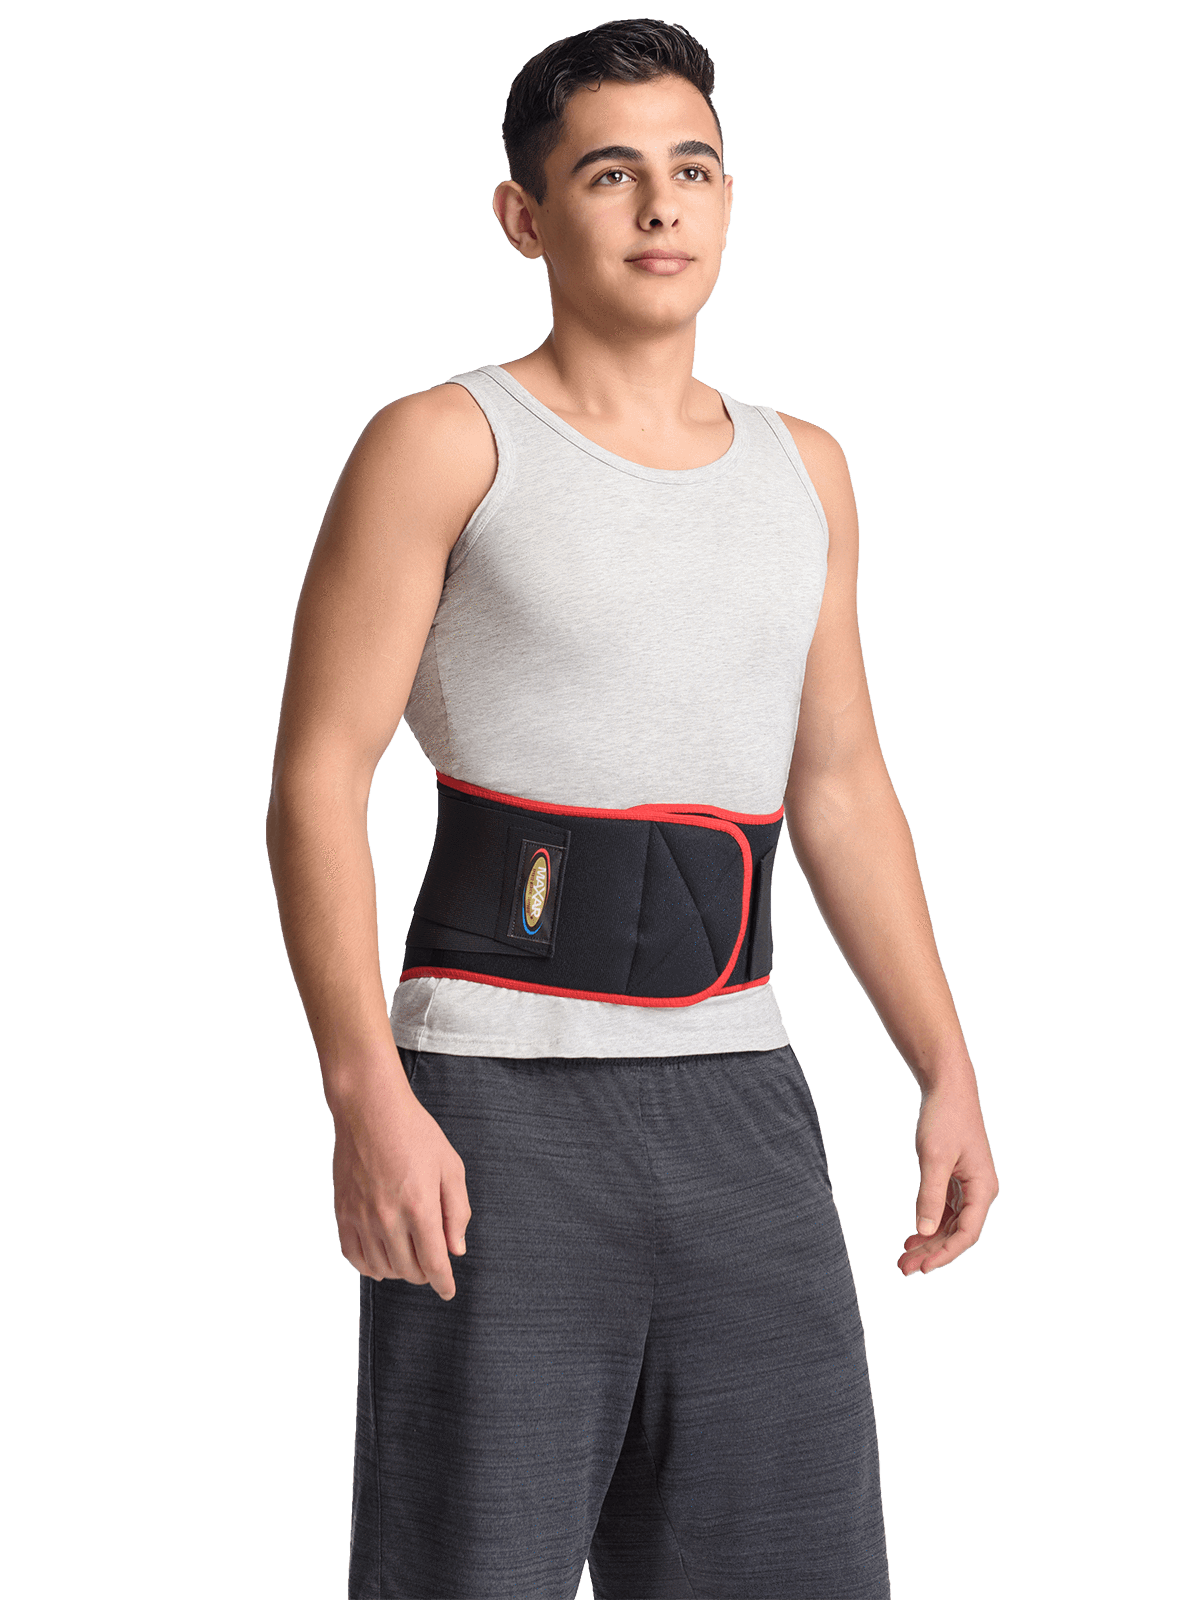 Lumbar Support Belt Lumbosacral Back Brace – Ergonomic Design and Brea –  UFEELGOOD